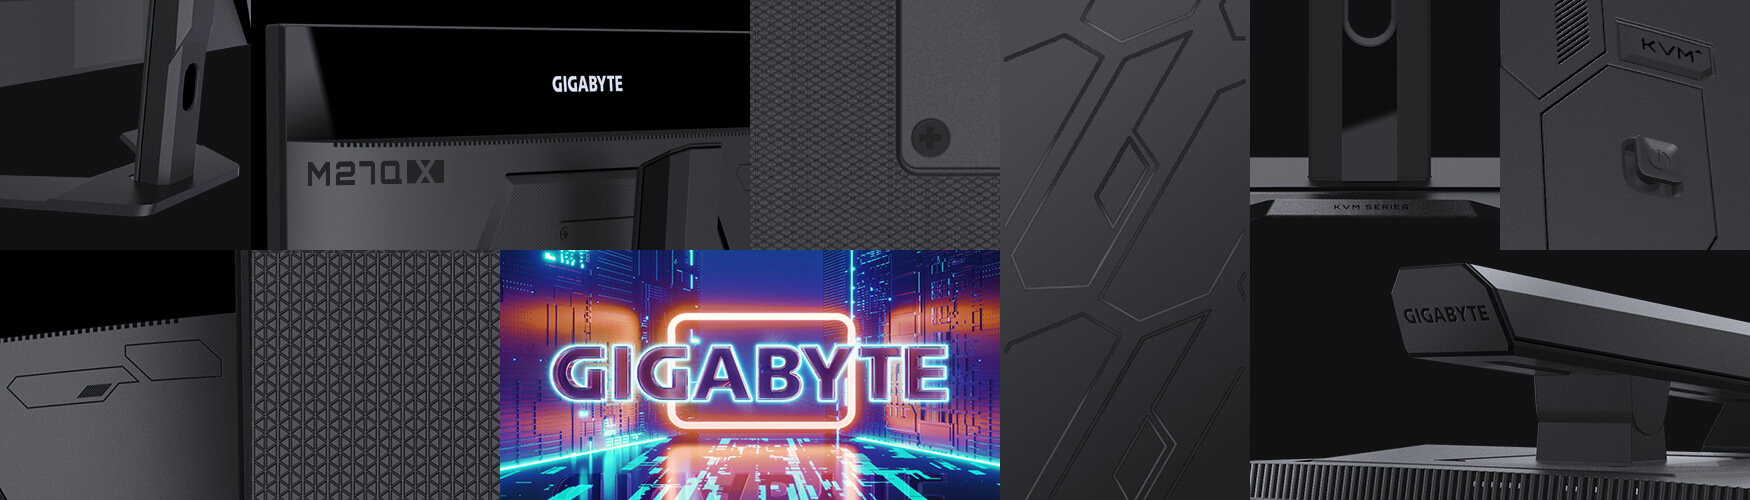 GIGABYTE M27Q-X 27 240Hz 1440P KVM Gaming Monitor, 2560 x 1440 SS IPS  Display, 1ms (GTG) Response Time, 92% DCI-P3, 1x Display Port 1.4, 2x HDMI  2.0, 2x USB 3.0, 1x USB